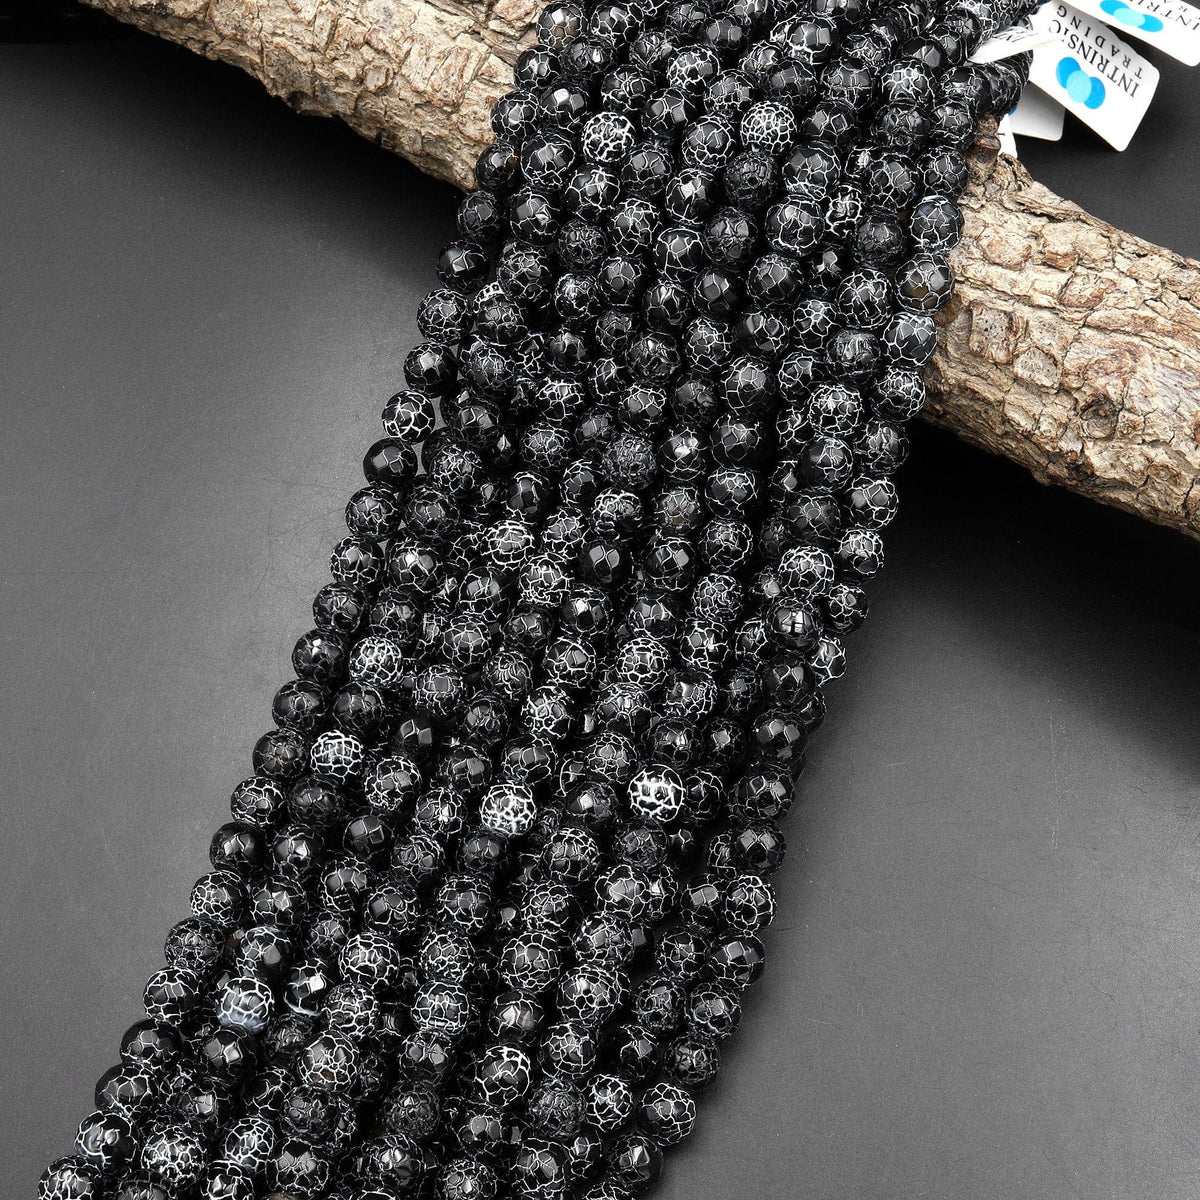 8mm Firebrick Dragon Vein Glass Beads | Hackberry Creek